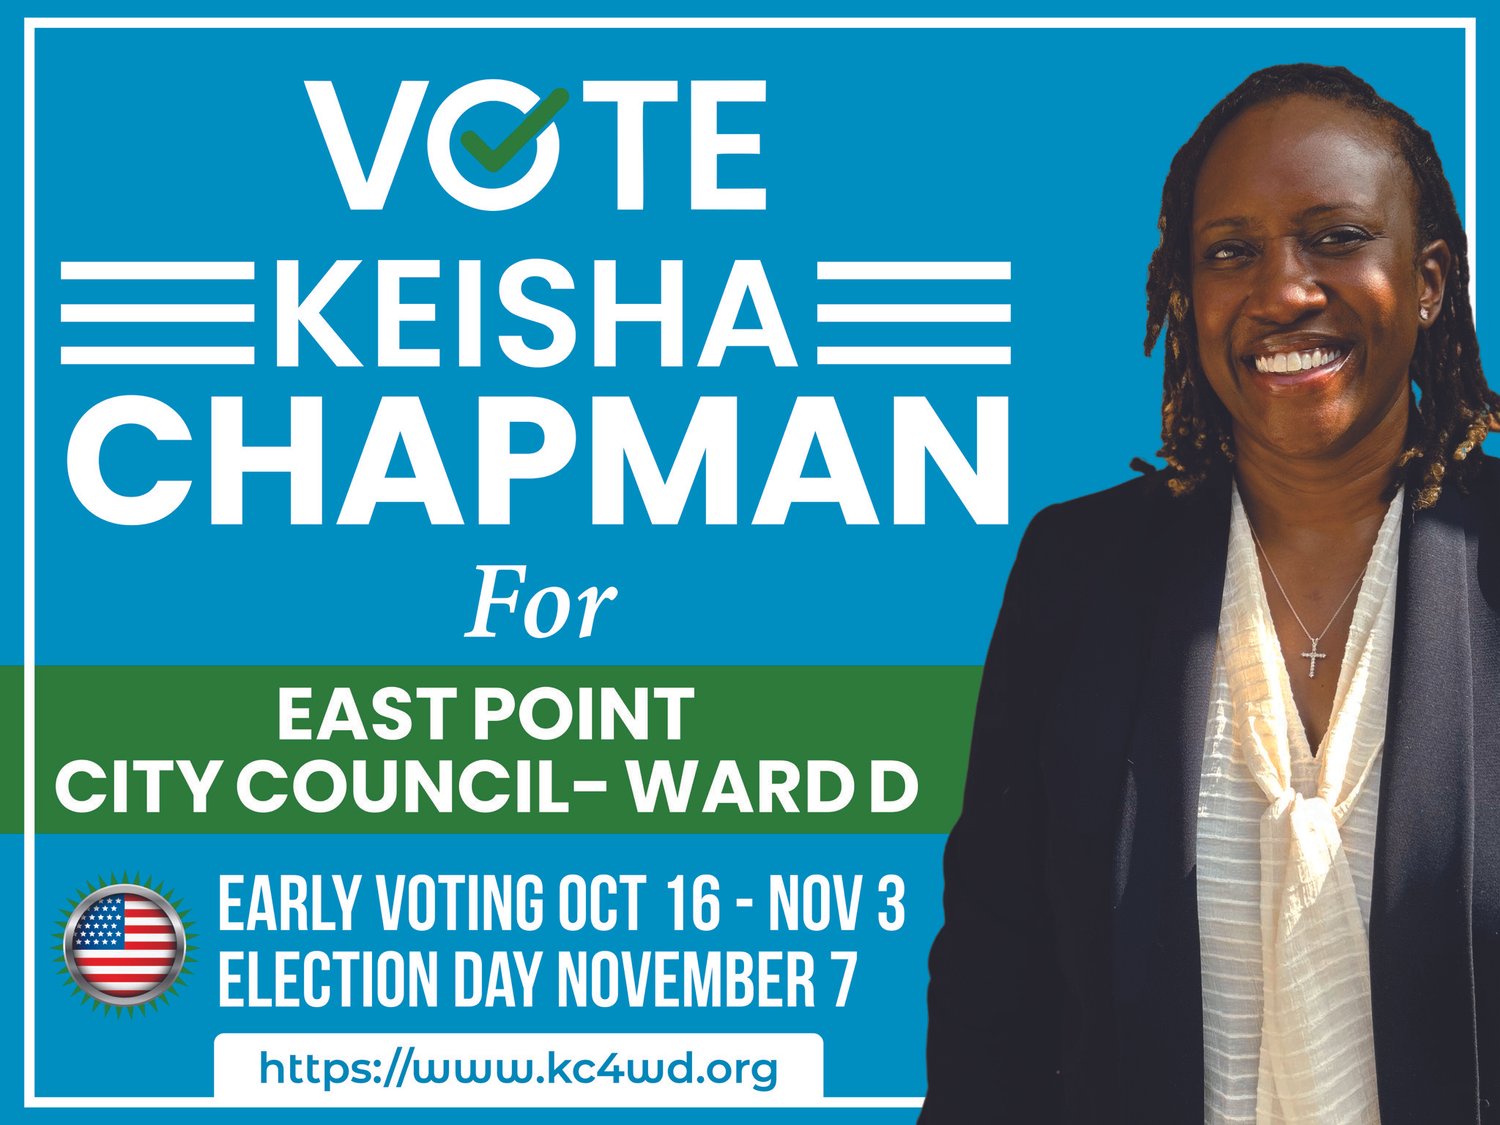 Vote Keisha Chapman City Council - Ward D